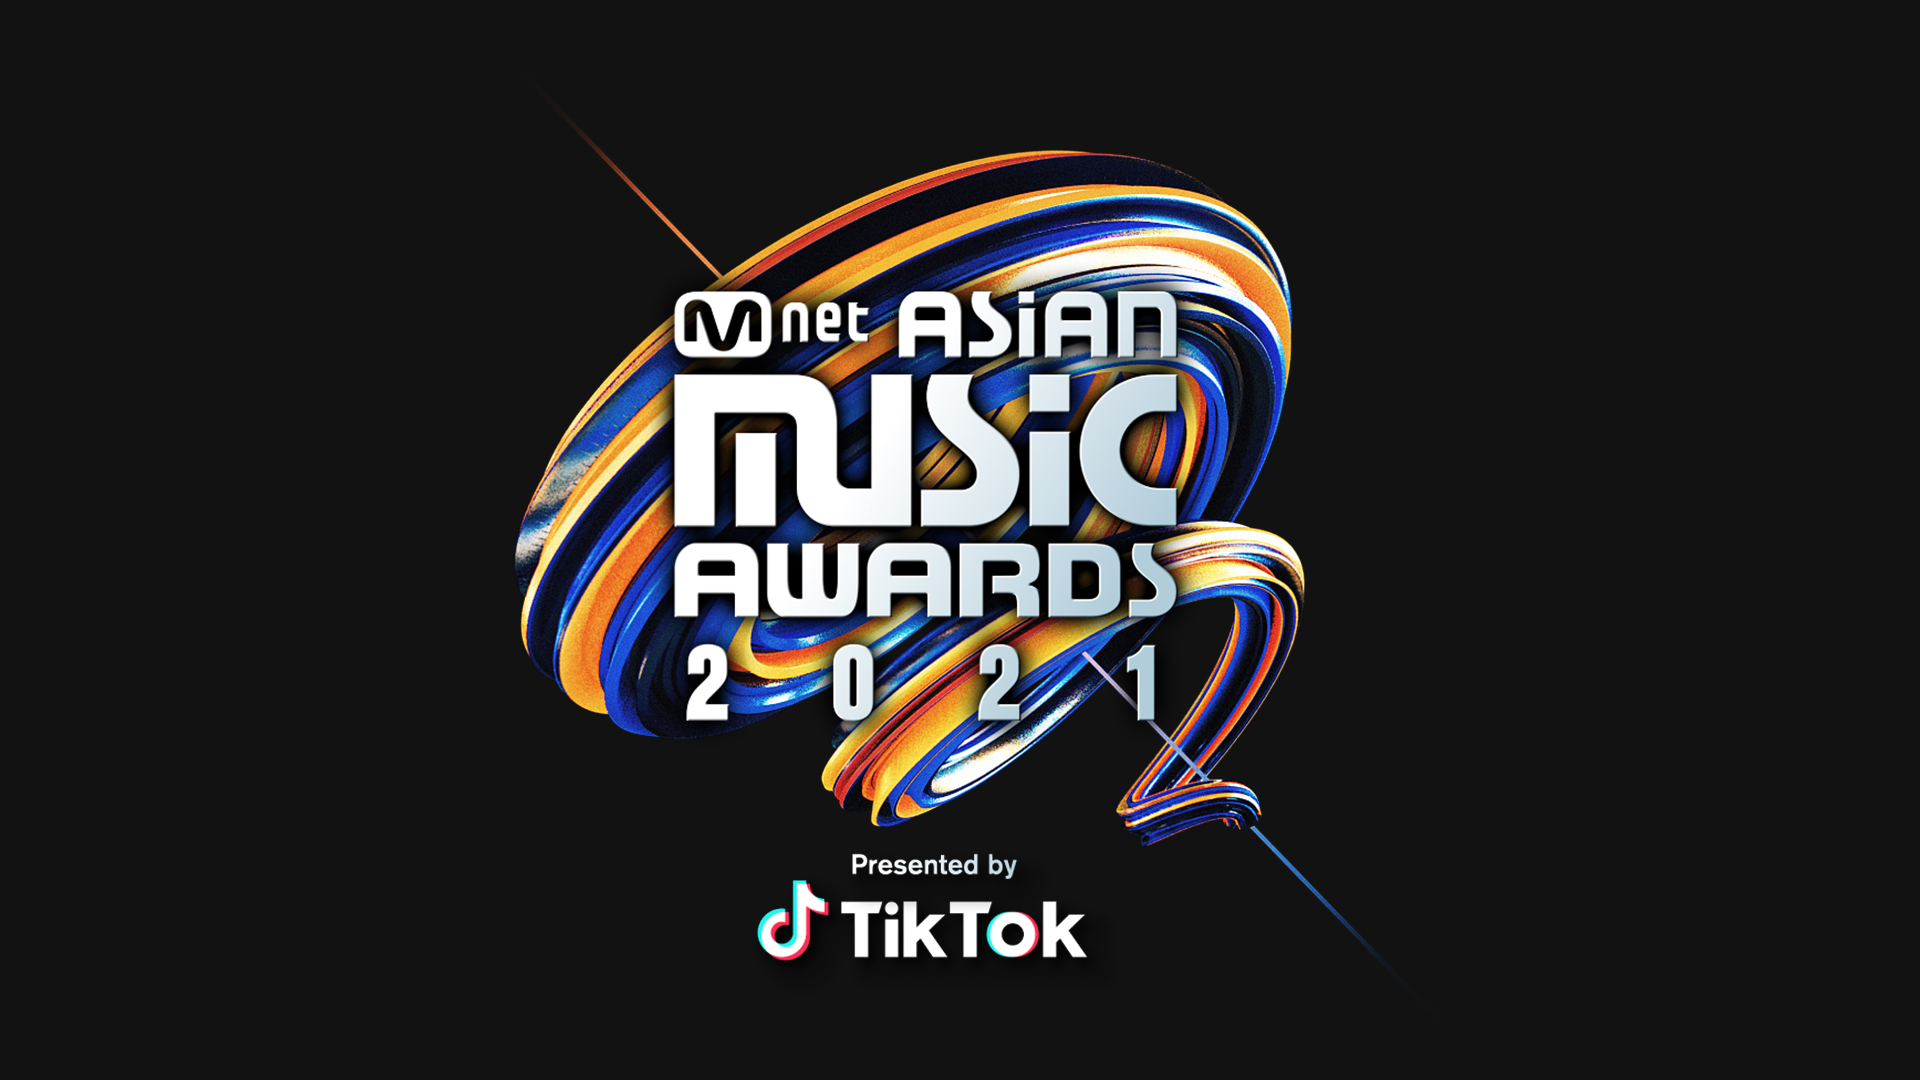 Auスマートパスプレミアム 21 Mnet Asian Music Awards配信記念 過去のmama受賞アーティストの Mnet Live でのパフォーマンスを集めた特別動画を公開 Kddi株式会社のプレスリリース